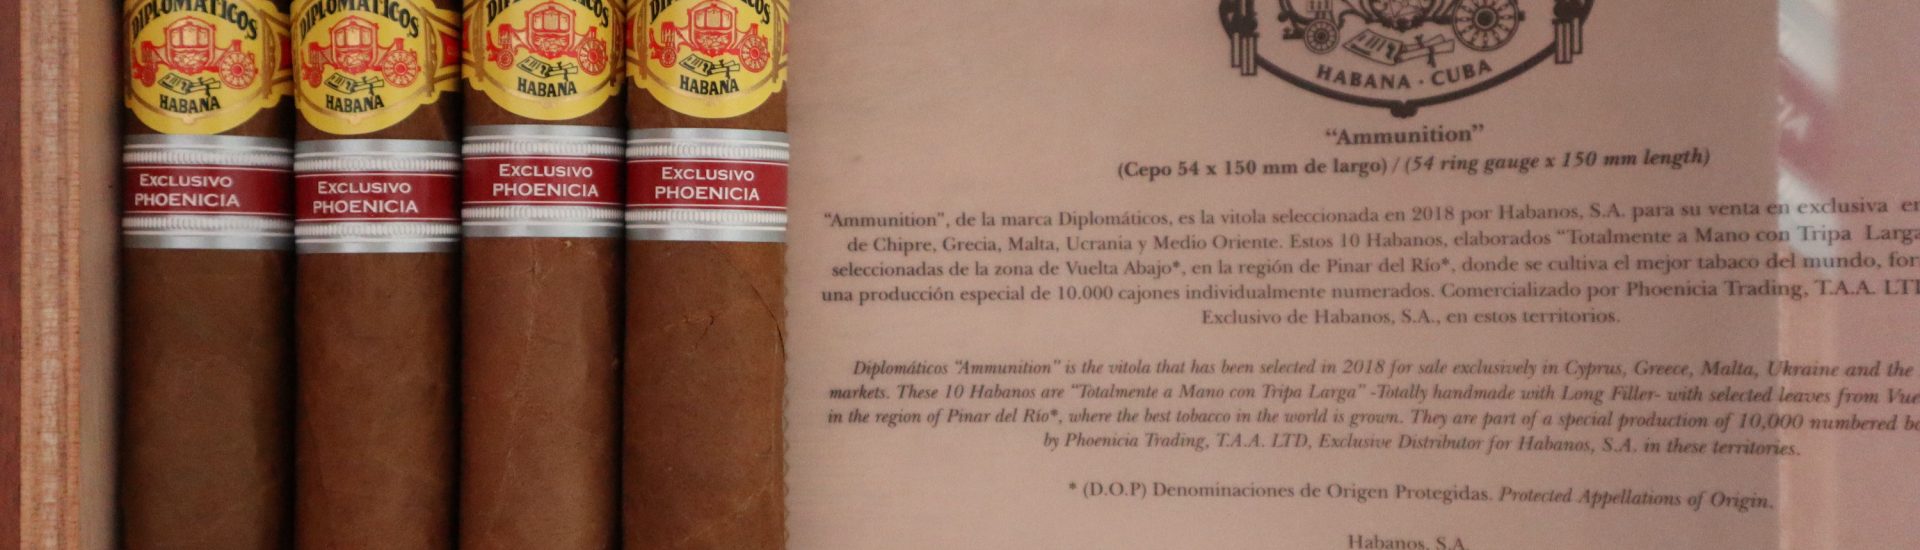 Diplomaticos Ammunition Phoenicia Regional Edition Cigar